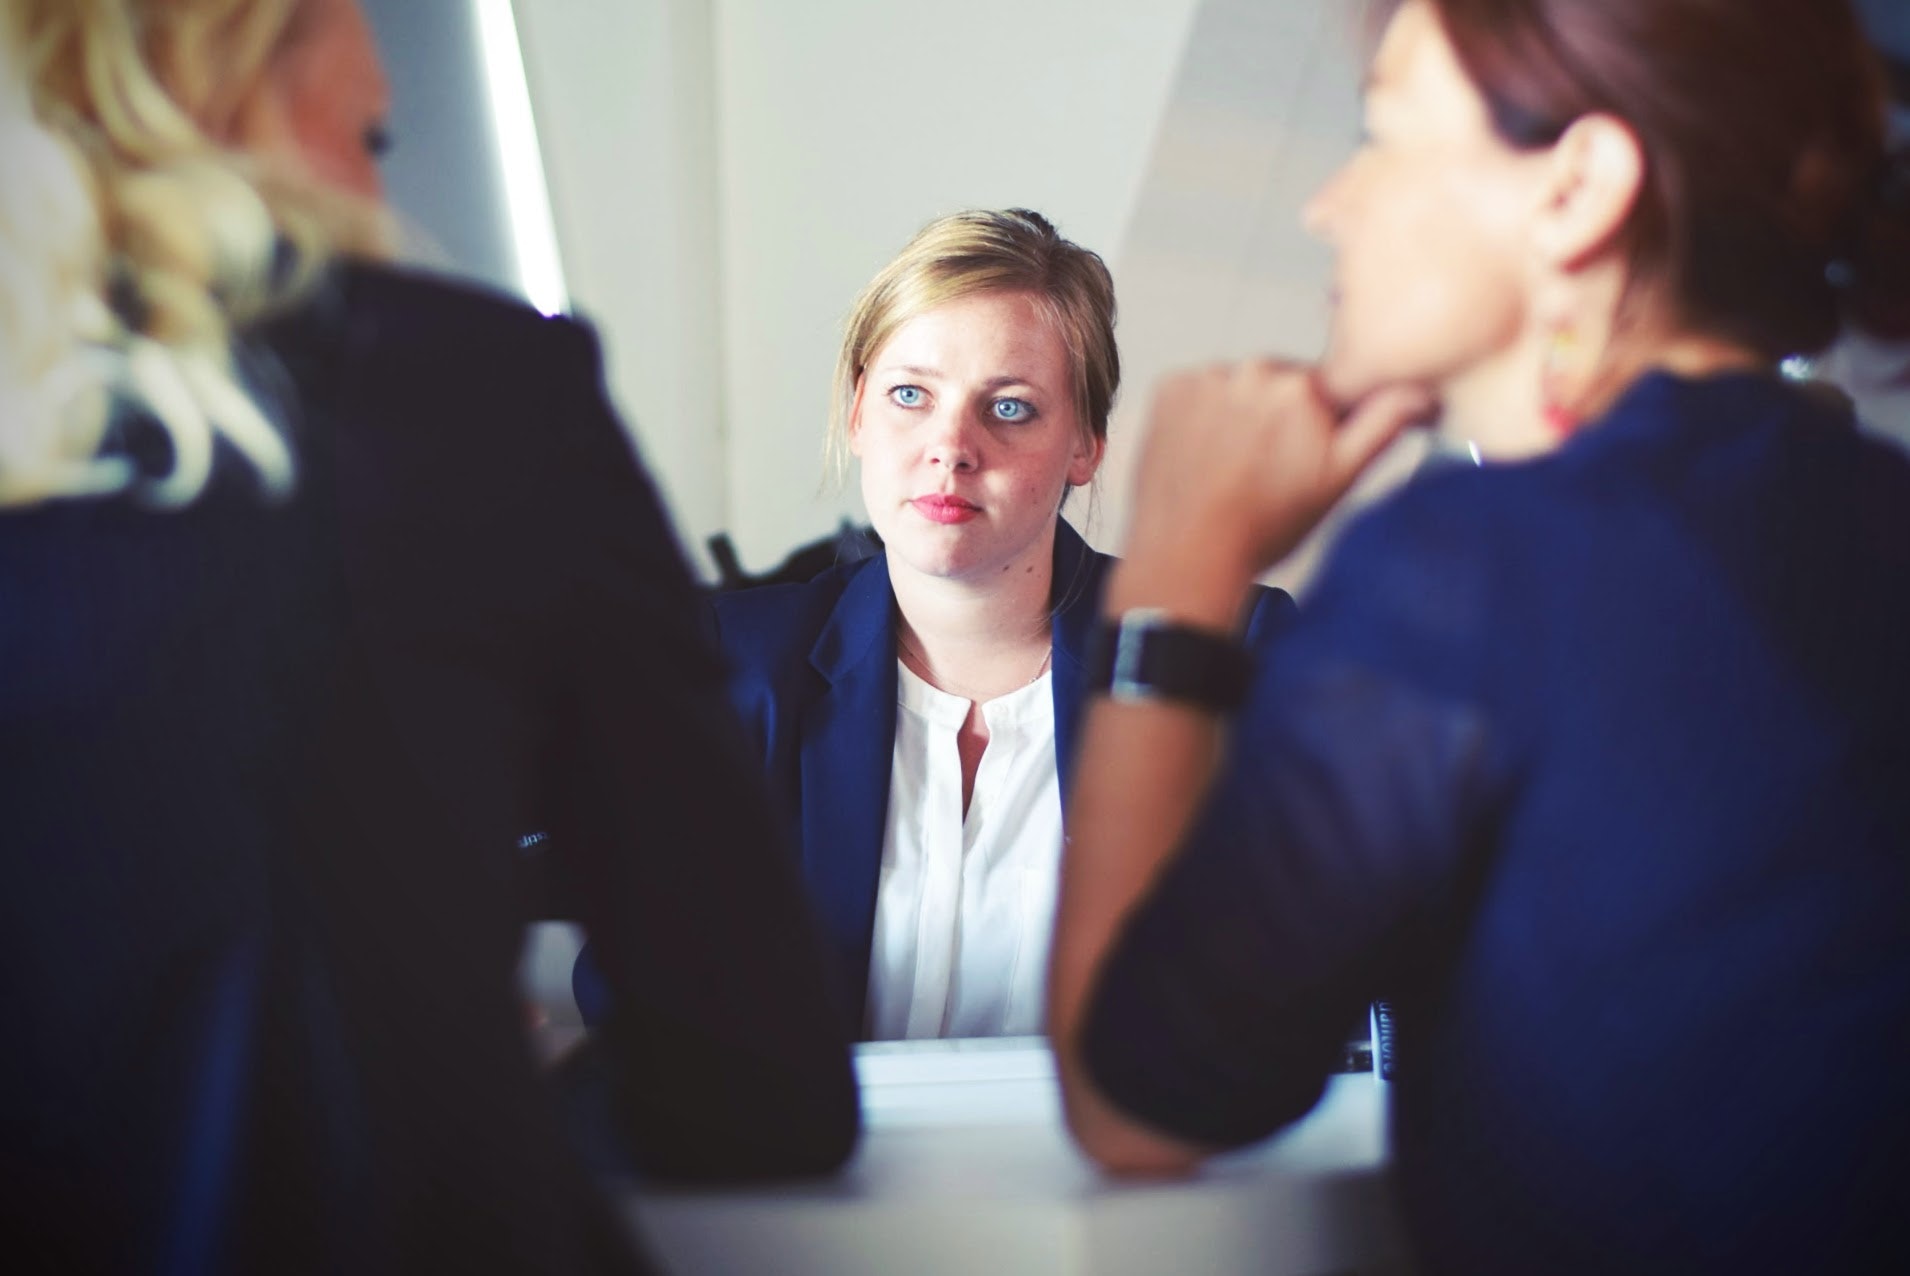 women professional seeking advice from her bosses